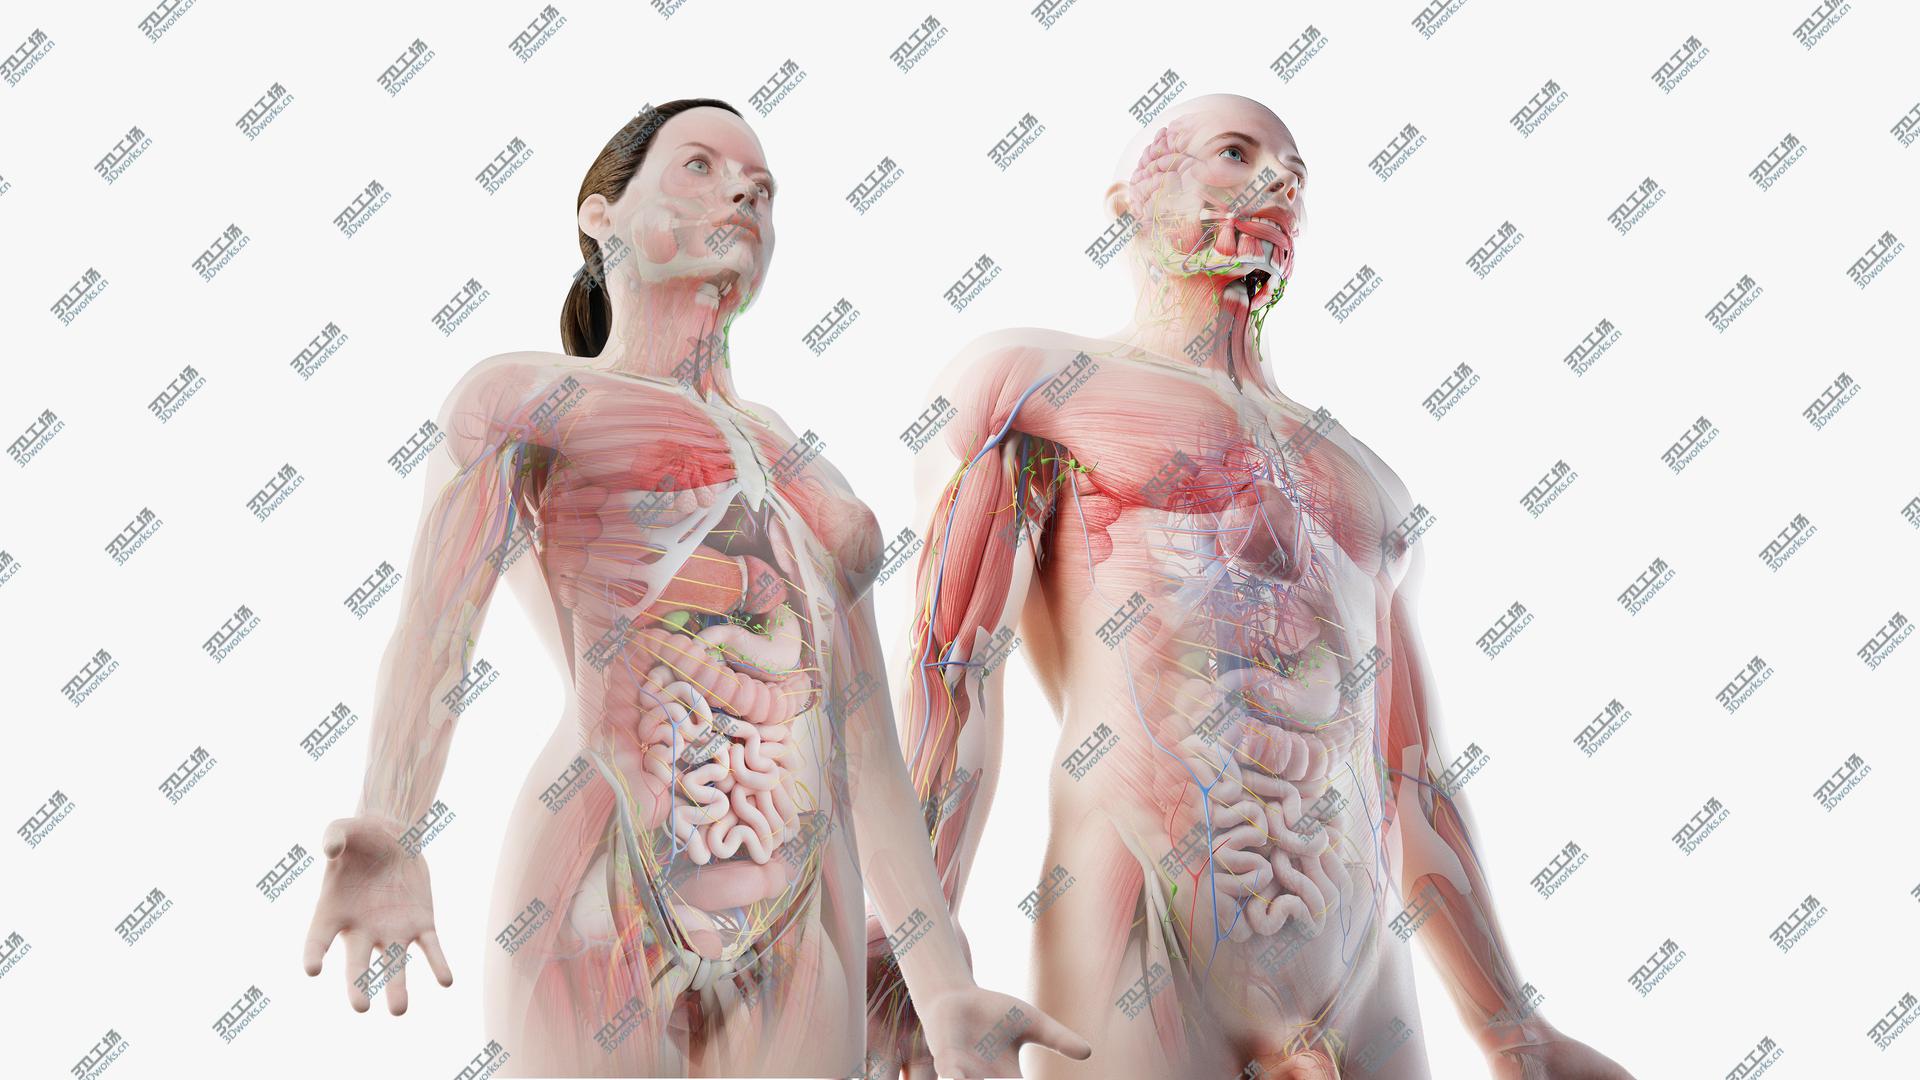 images/goods_img/20210113/3D Full Male And Female Anatomy Set (Cinema Rigged) model/2.jpg